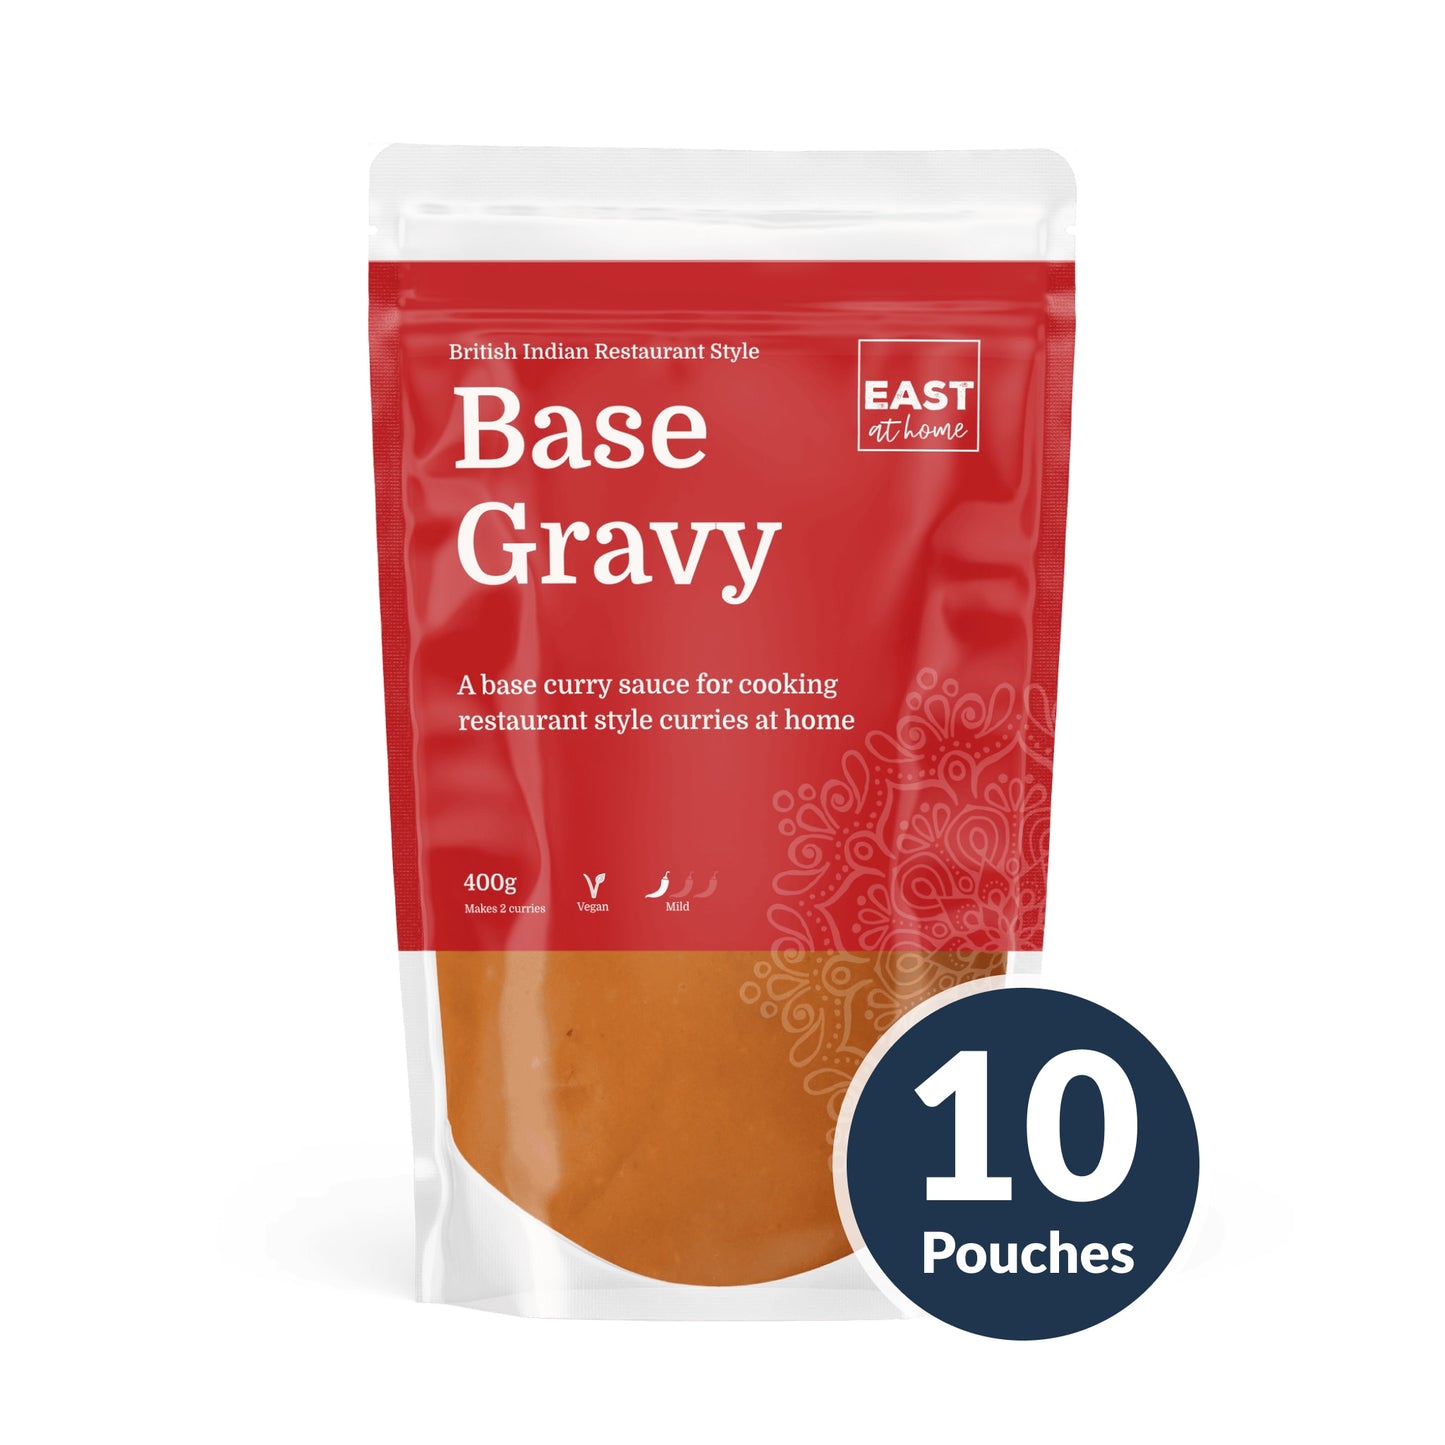 BIR Base Gravy - 10 Pouches